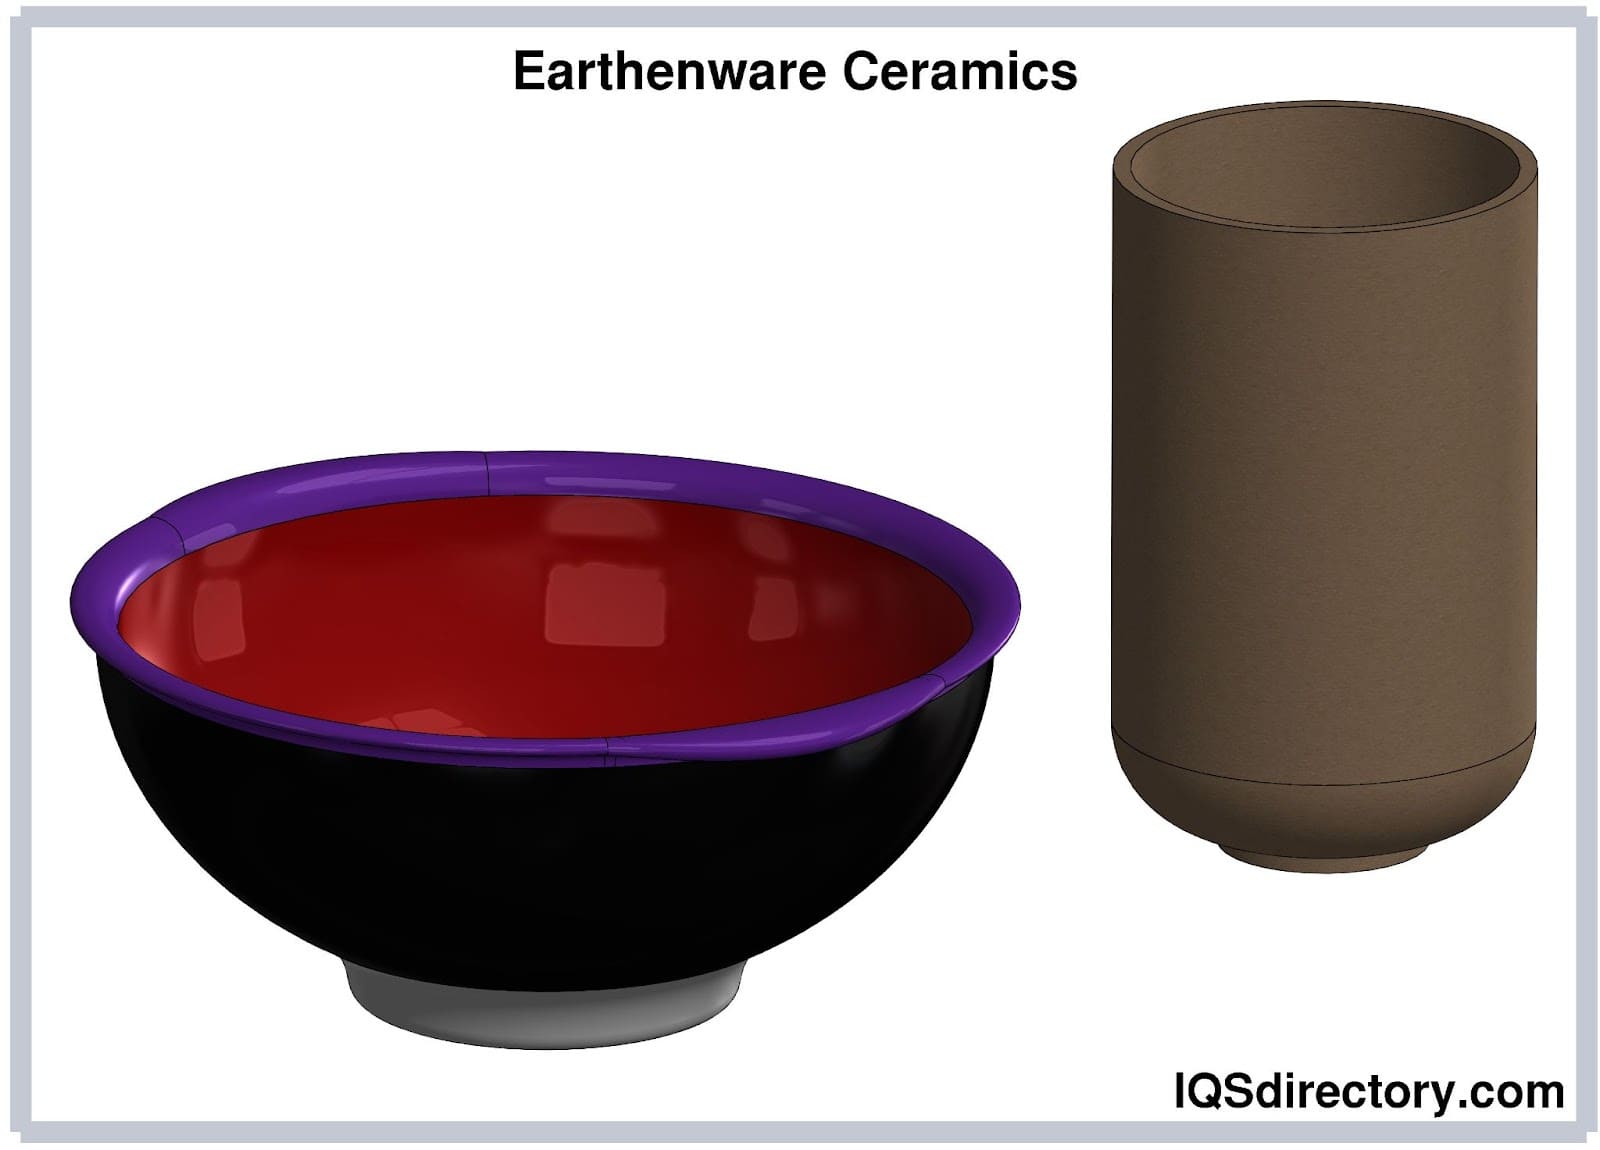 Earthenware Ceramics